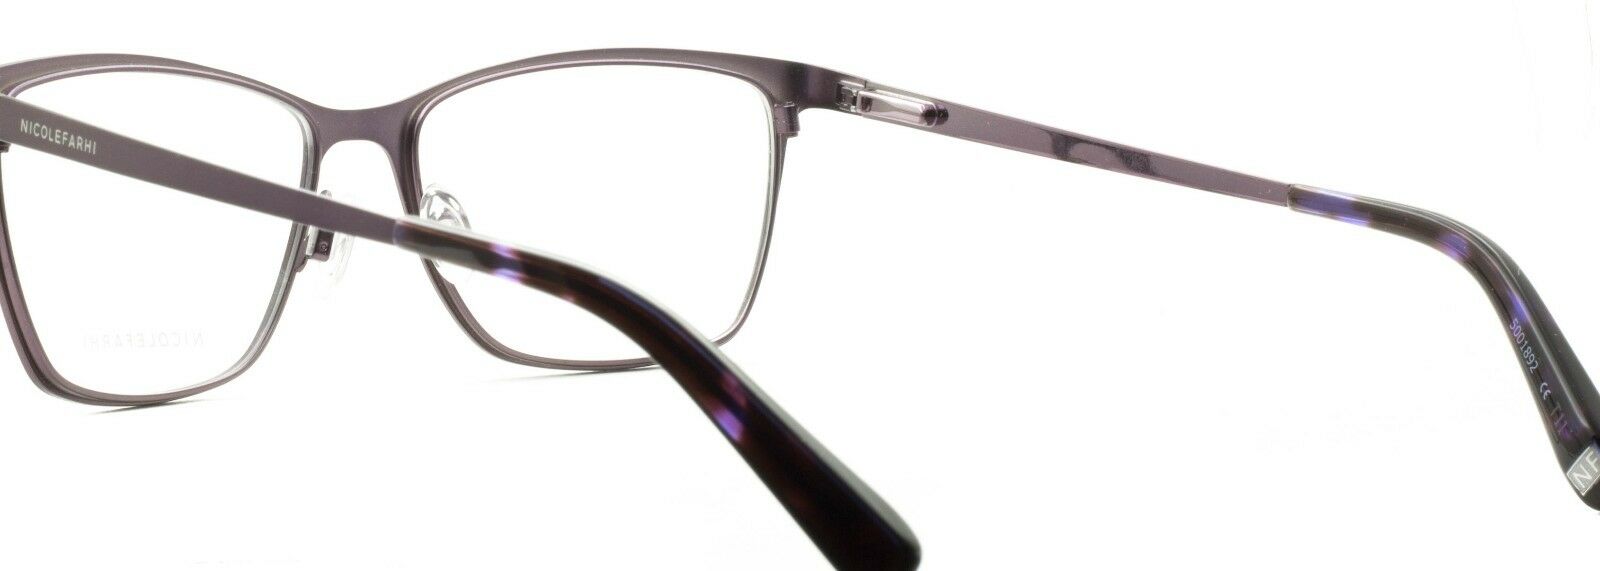 Nicole Farhi 06 30565531 52mm Eyewear Glasses RX Optical Eyeglasses FRAMES - New